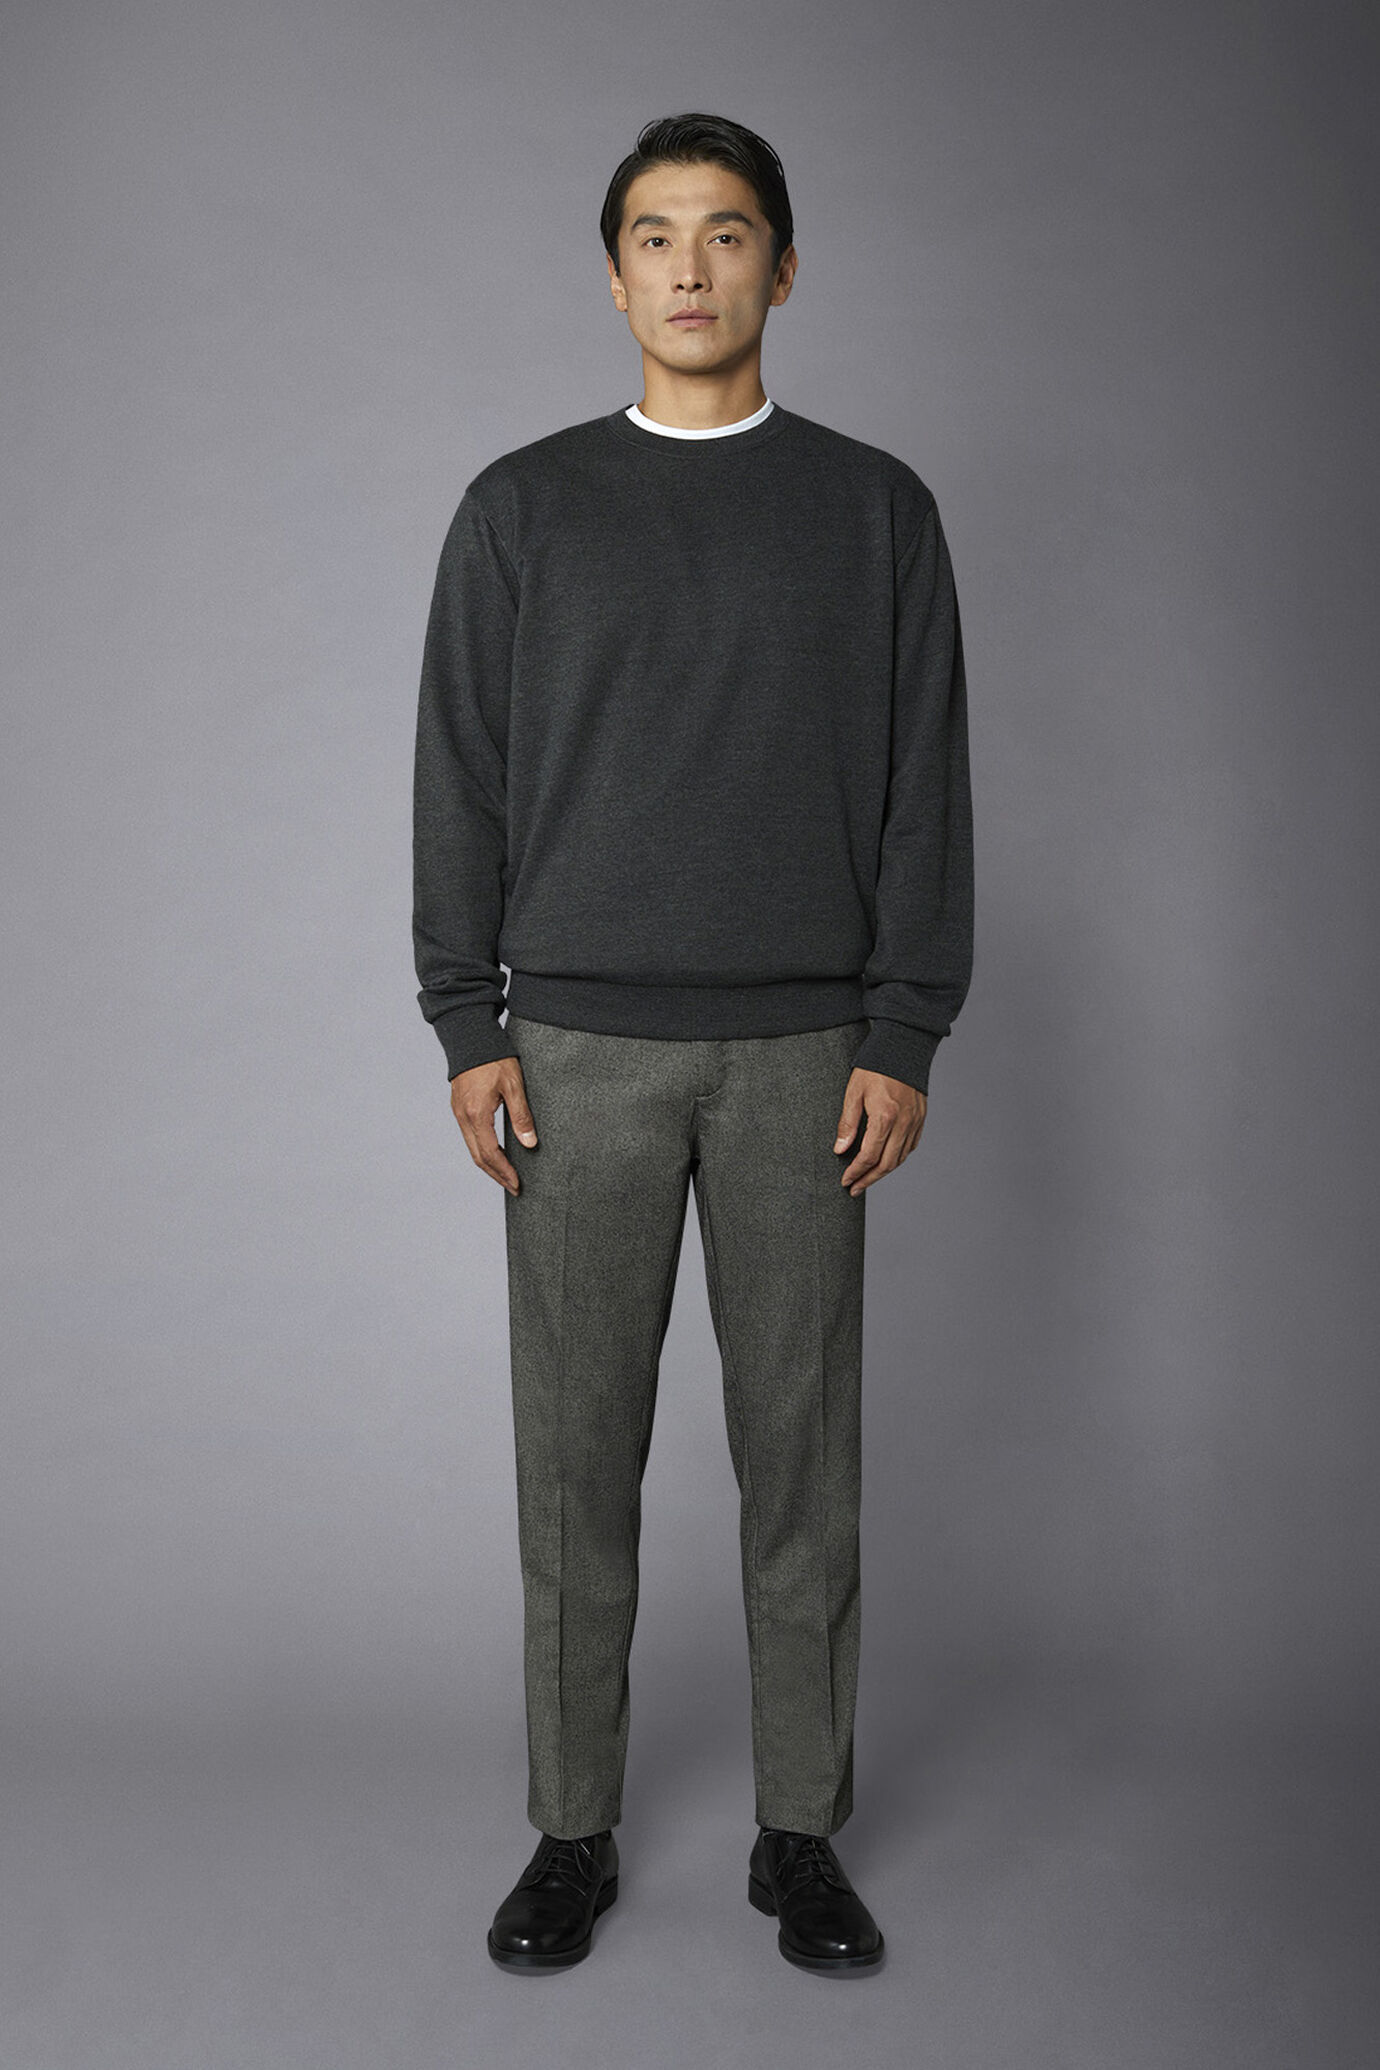 Men's chino pants woven cotton hand wool tweed regular fit